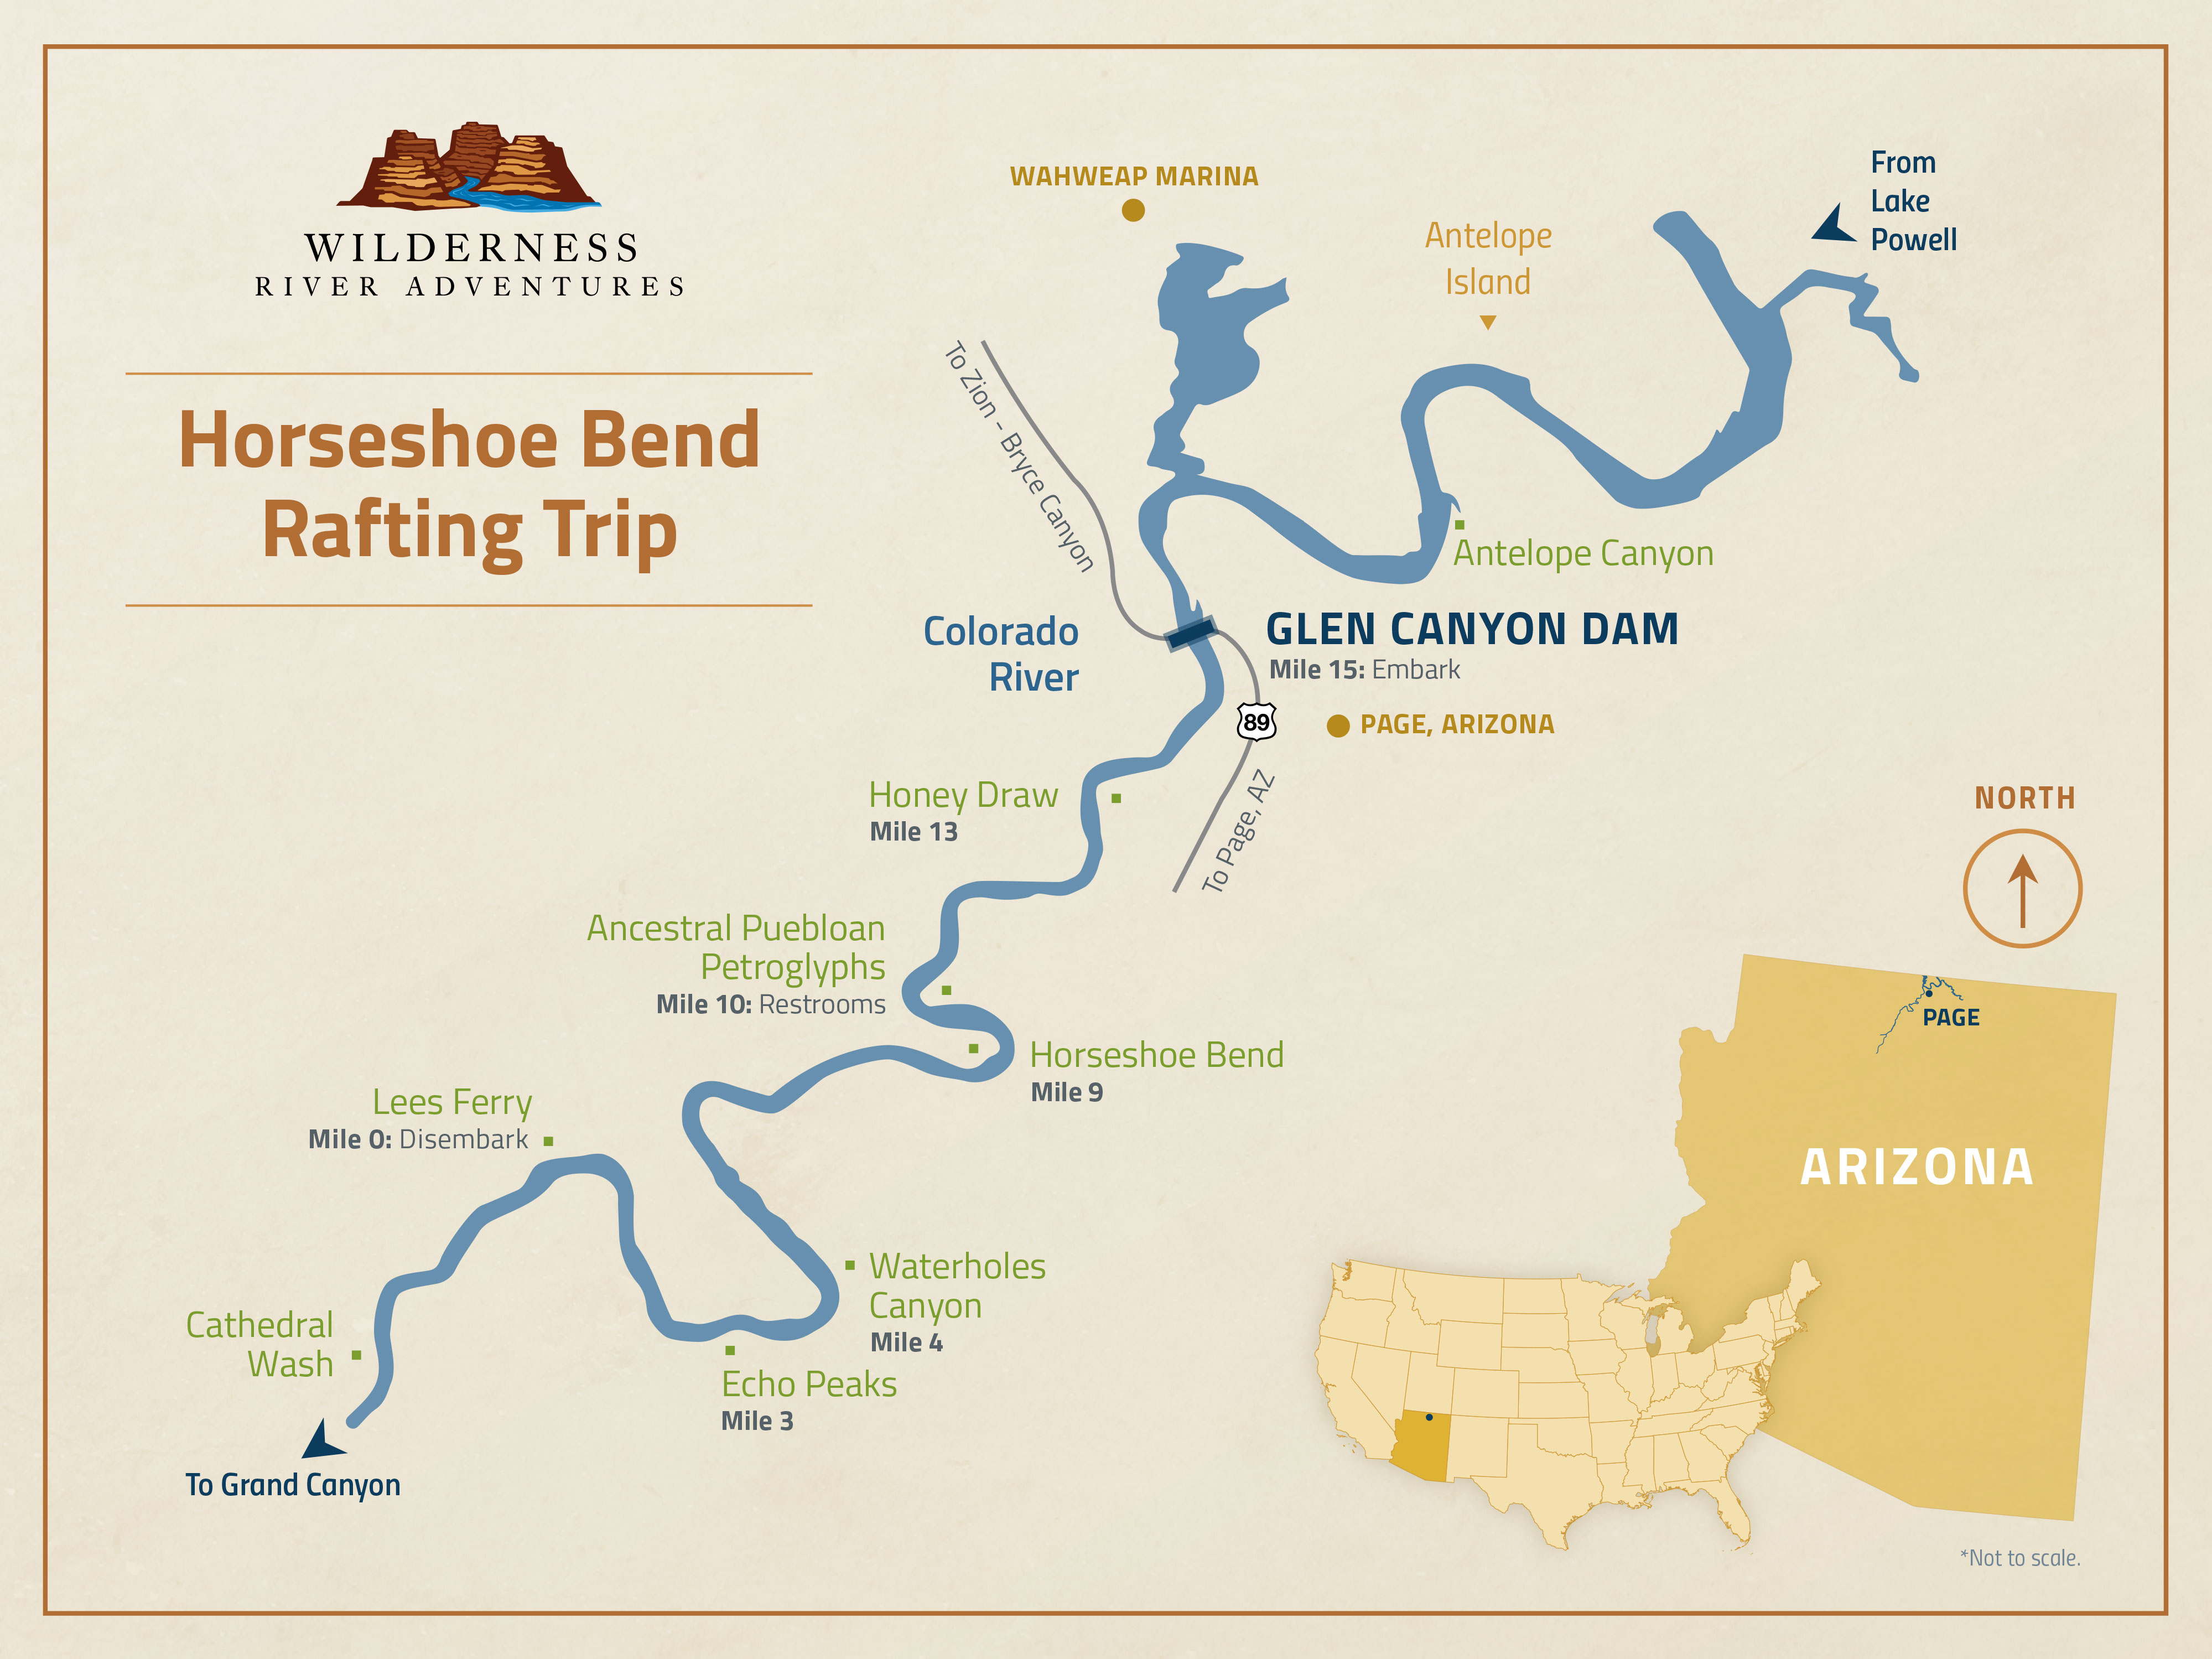 Map Credit: Wilderness River Adventures